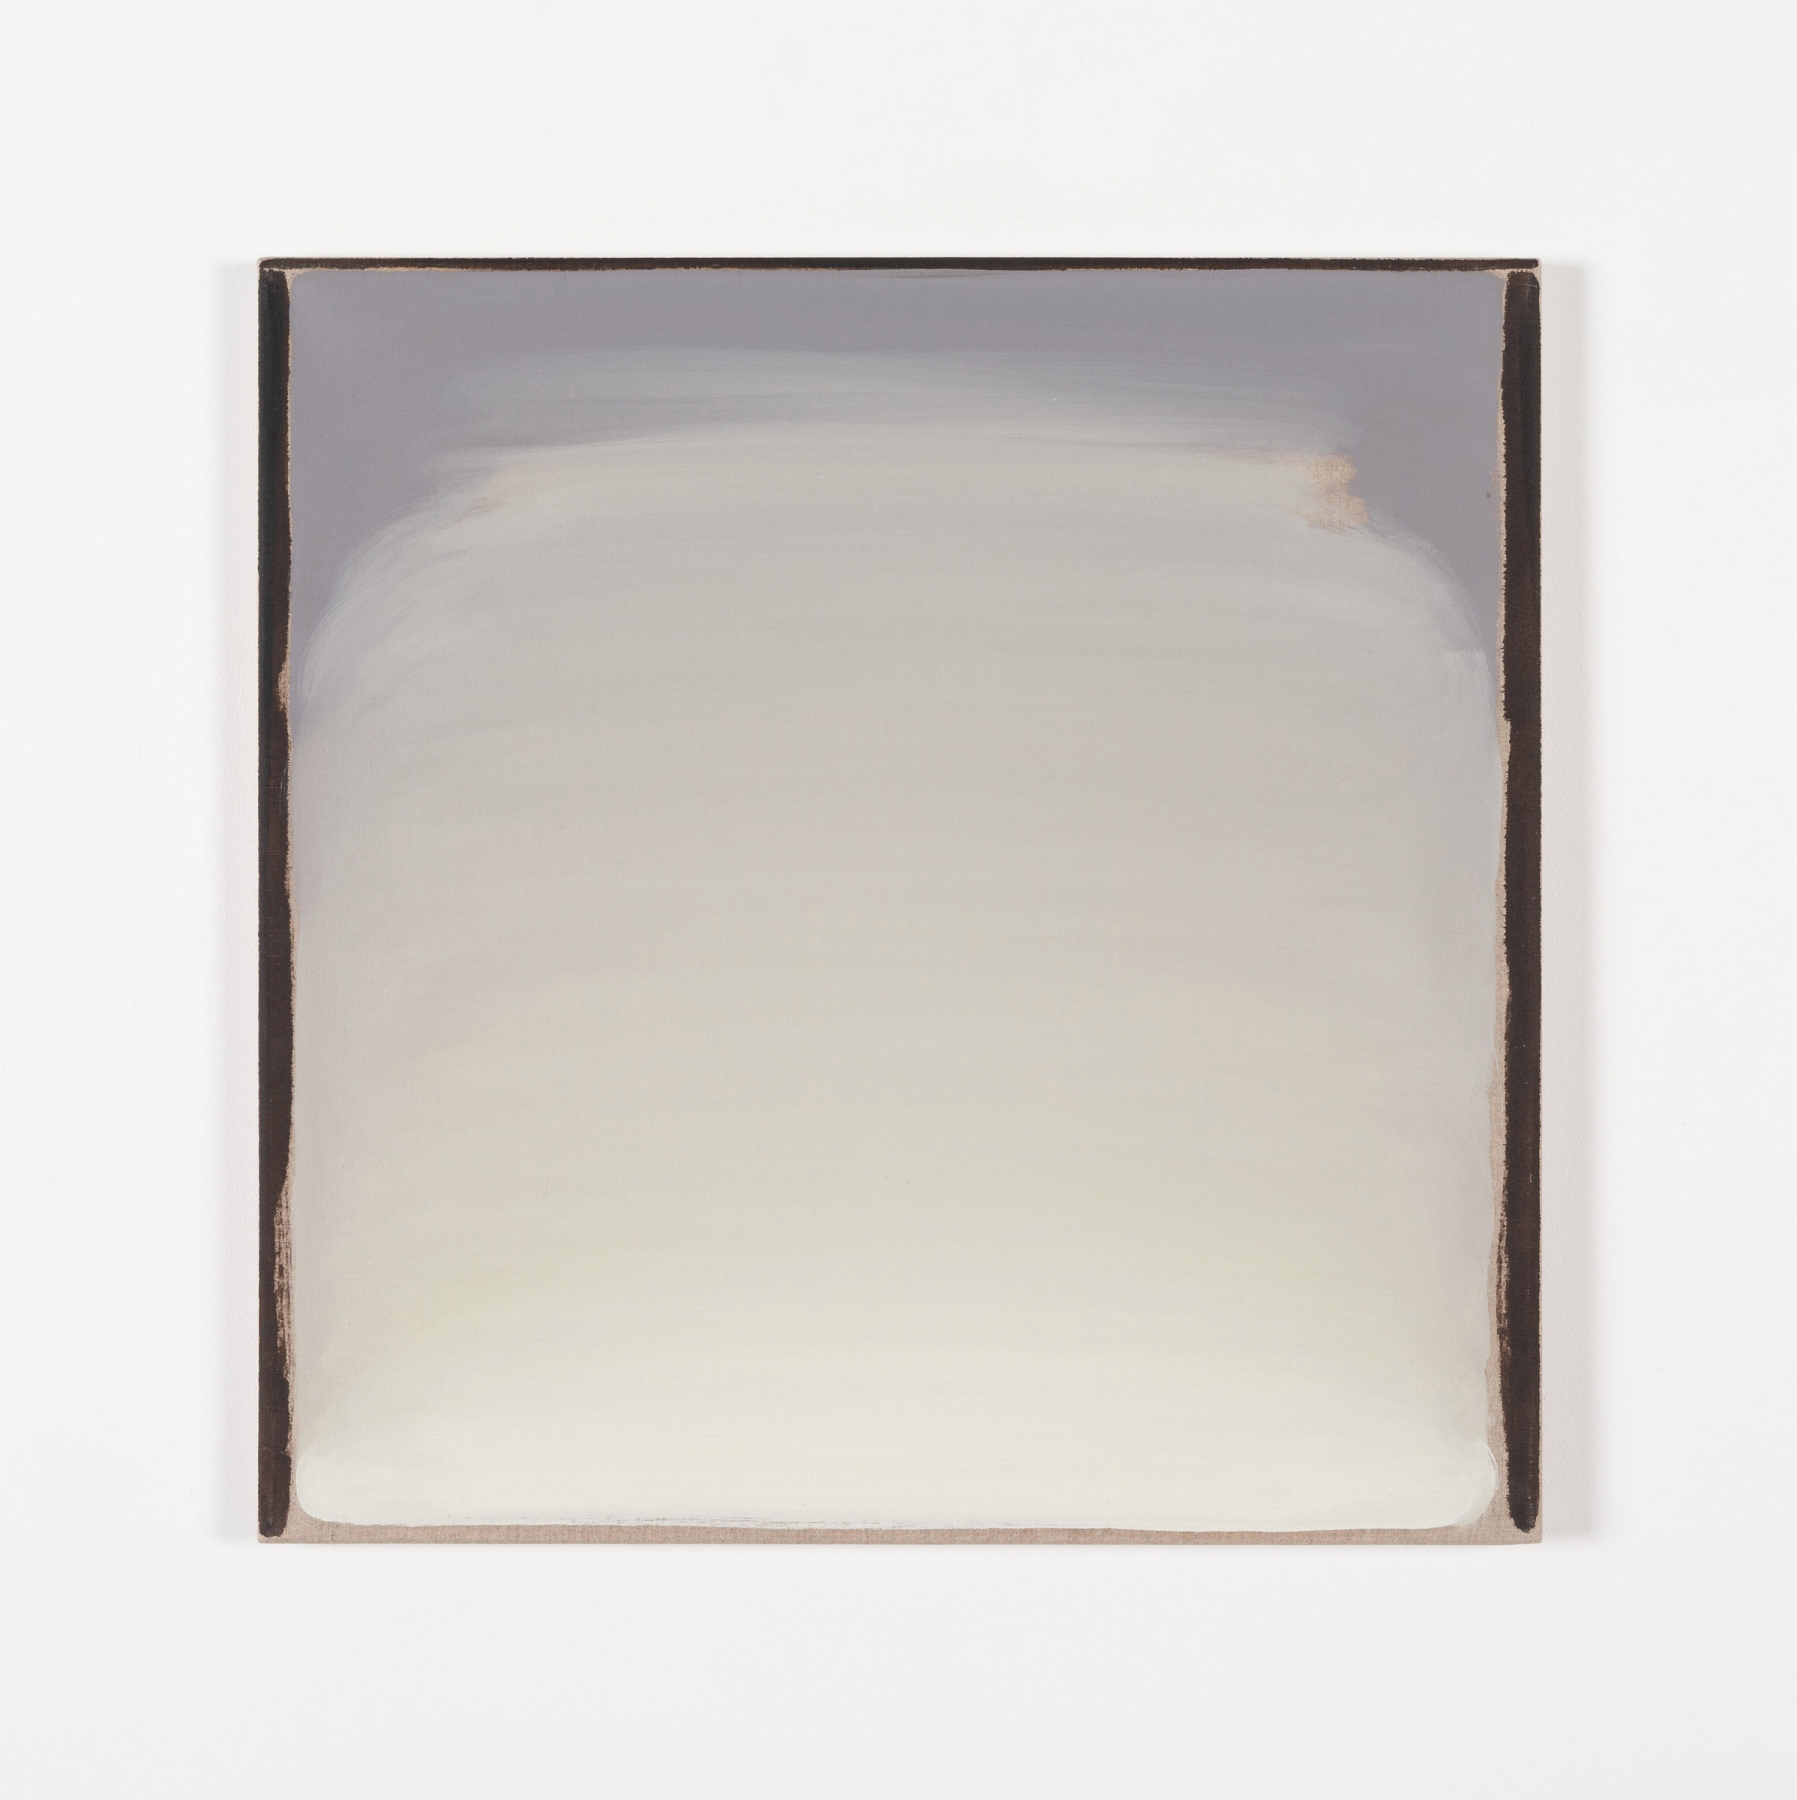 William McKeown&nbsp;
Untitled, 2009 - 2011
oil on linen
48 x 48 cm / 18.9 x 18.9 in&nbsp;